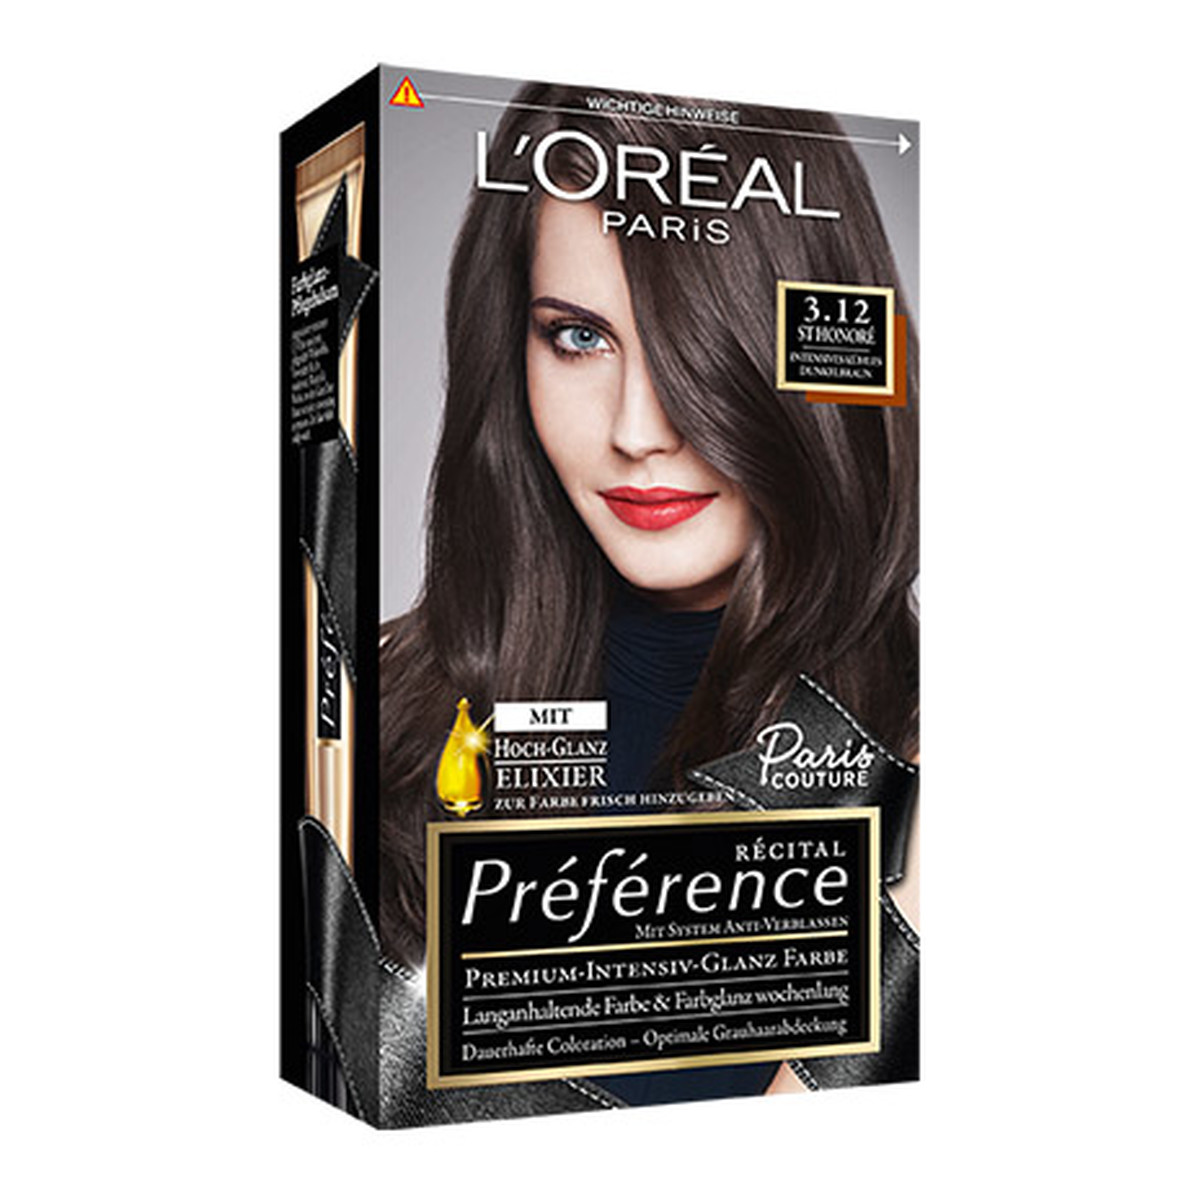 L'Oreal Paris Recital Preference Farba Do Włosów 120ml